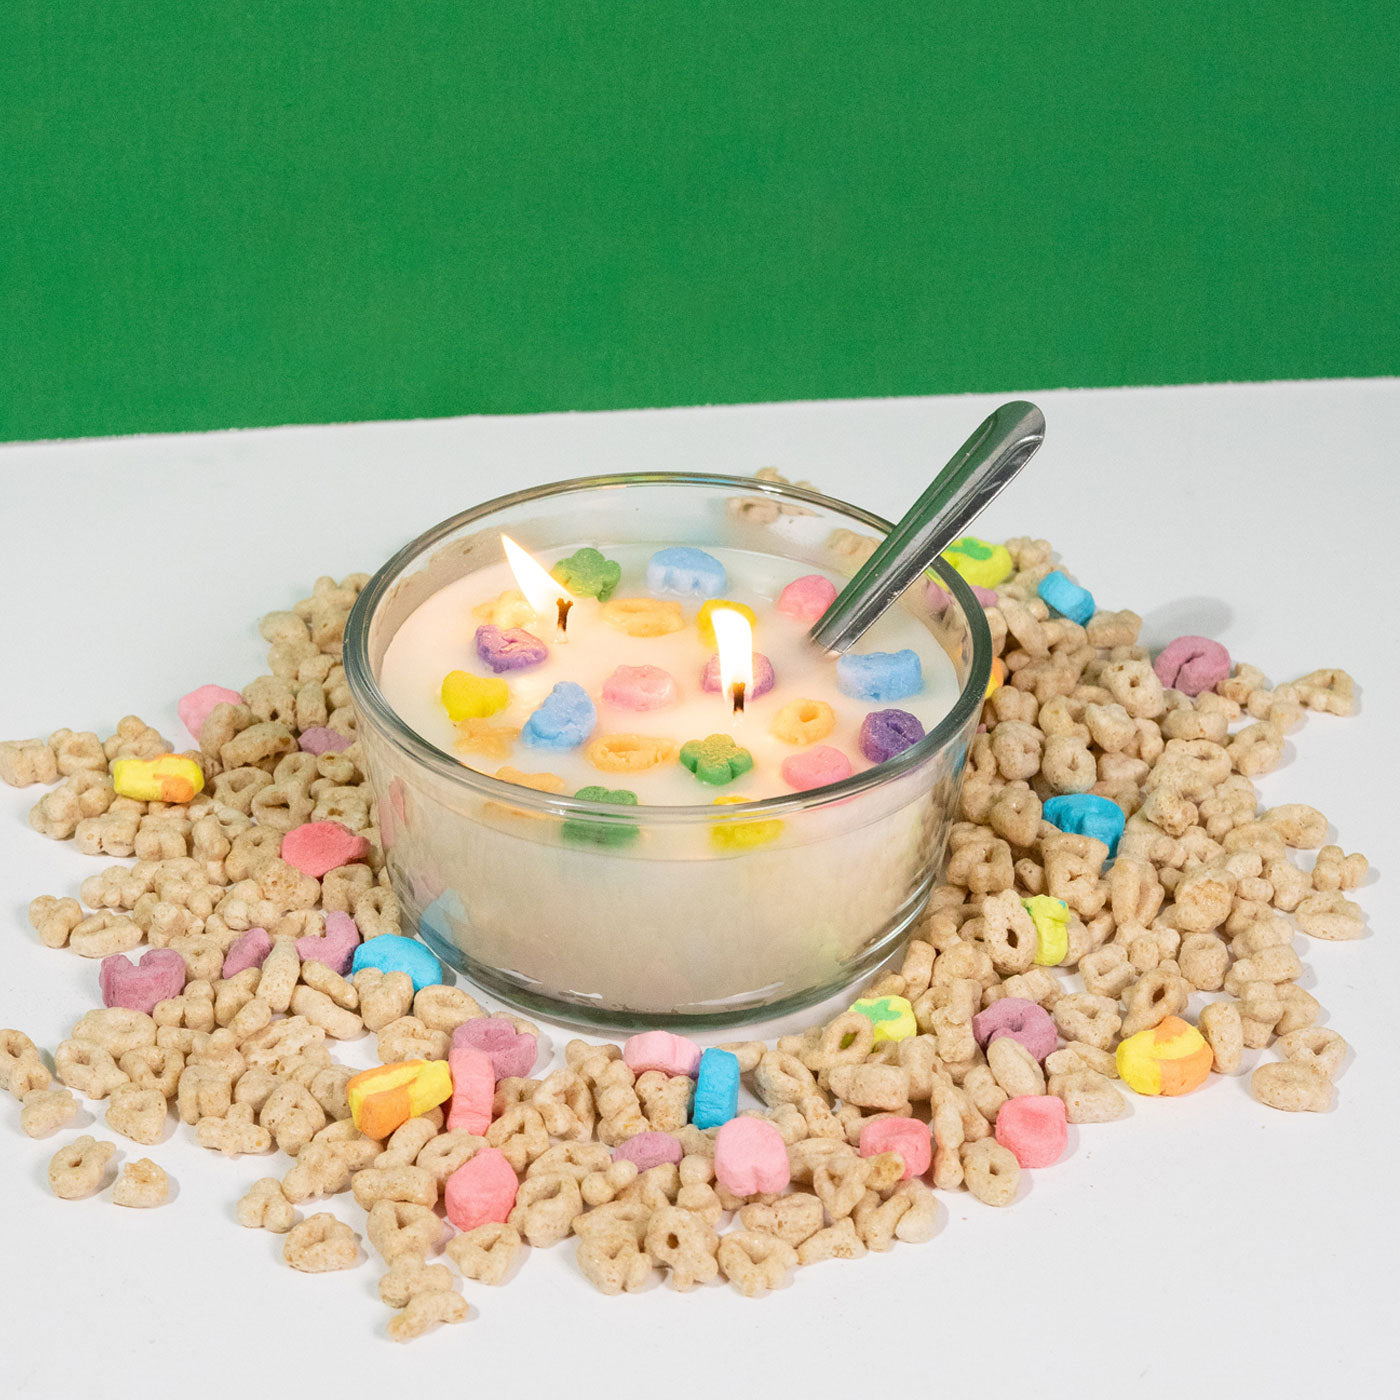 Shamrock Surprise Cereal Bowl Candle